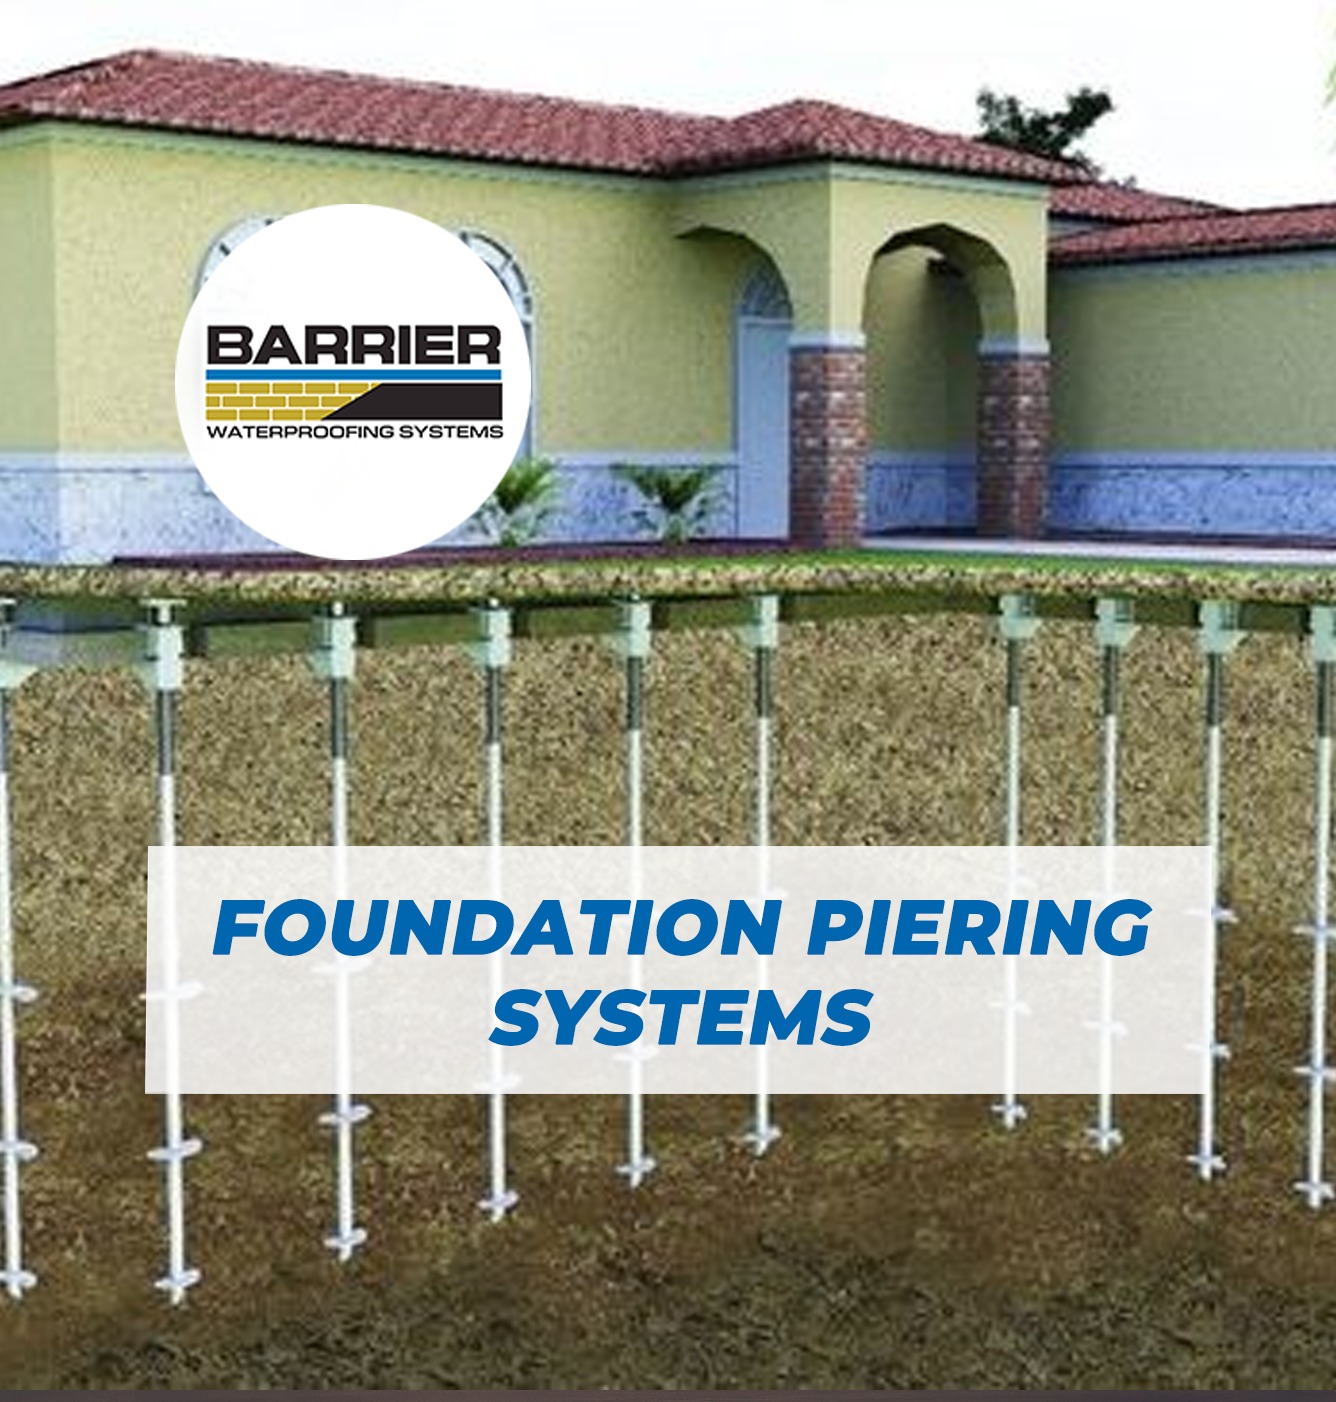 House utilizing foundation piering system to correct problem